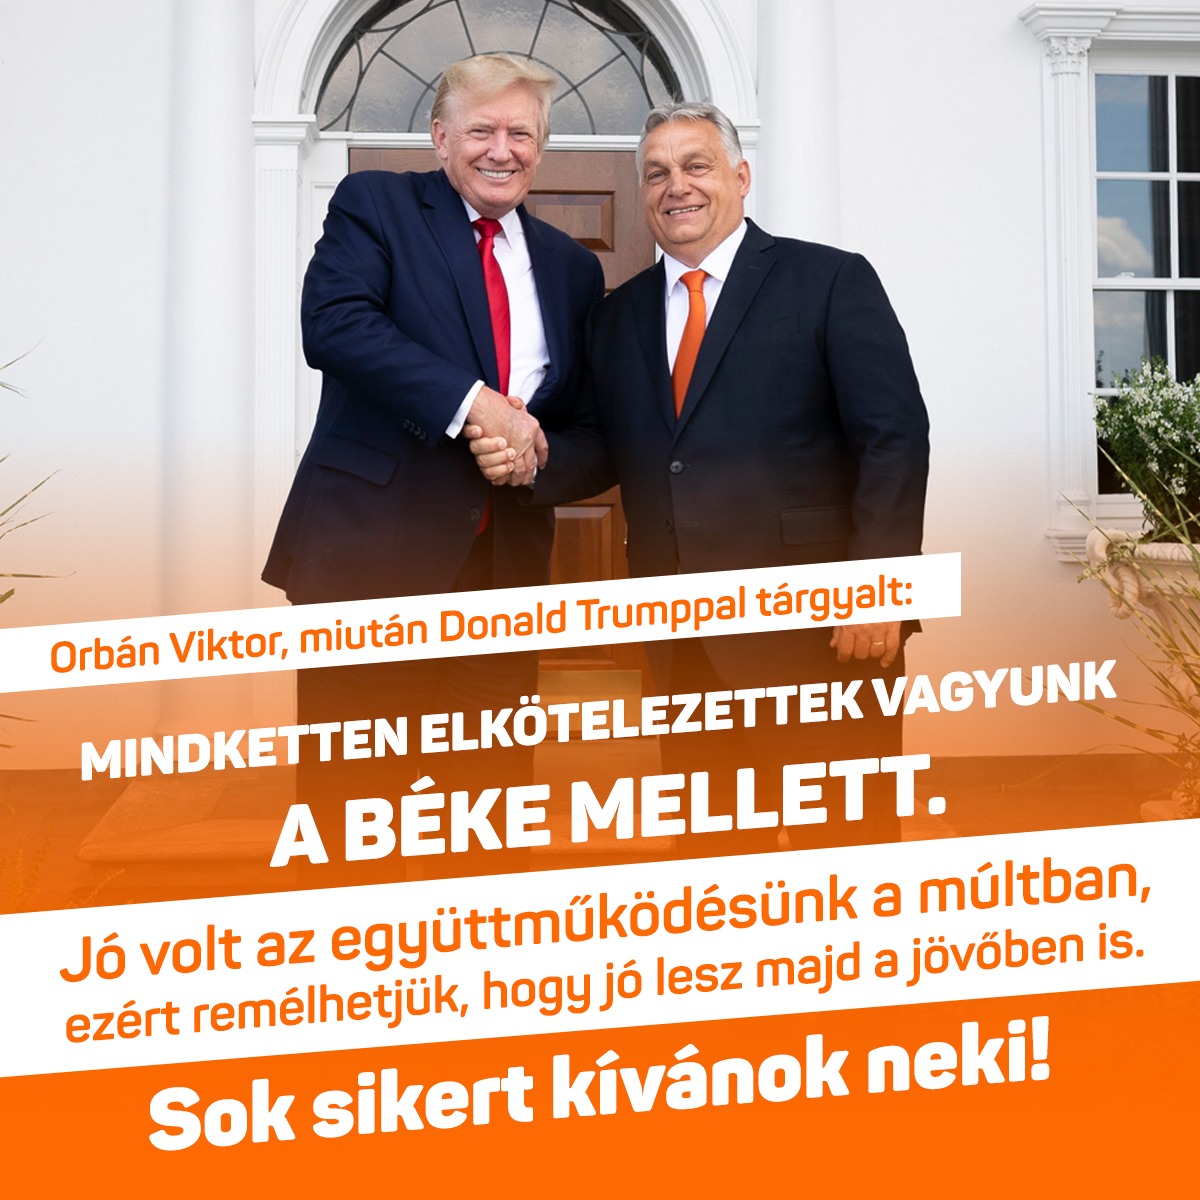 Orbán Viktor Donald Trumppal tárgyalt.